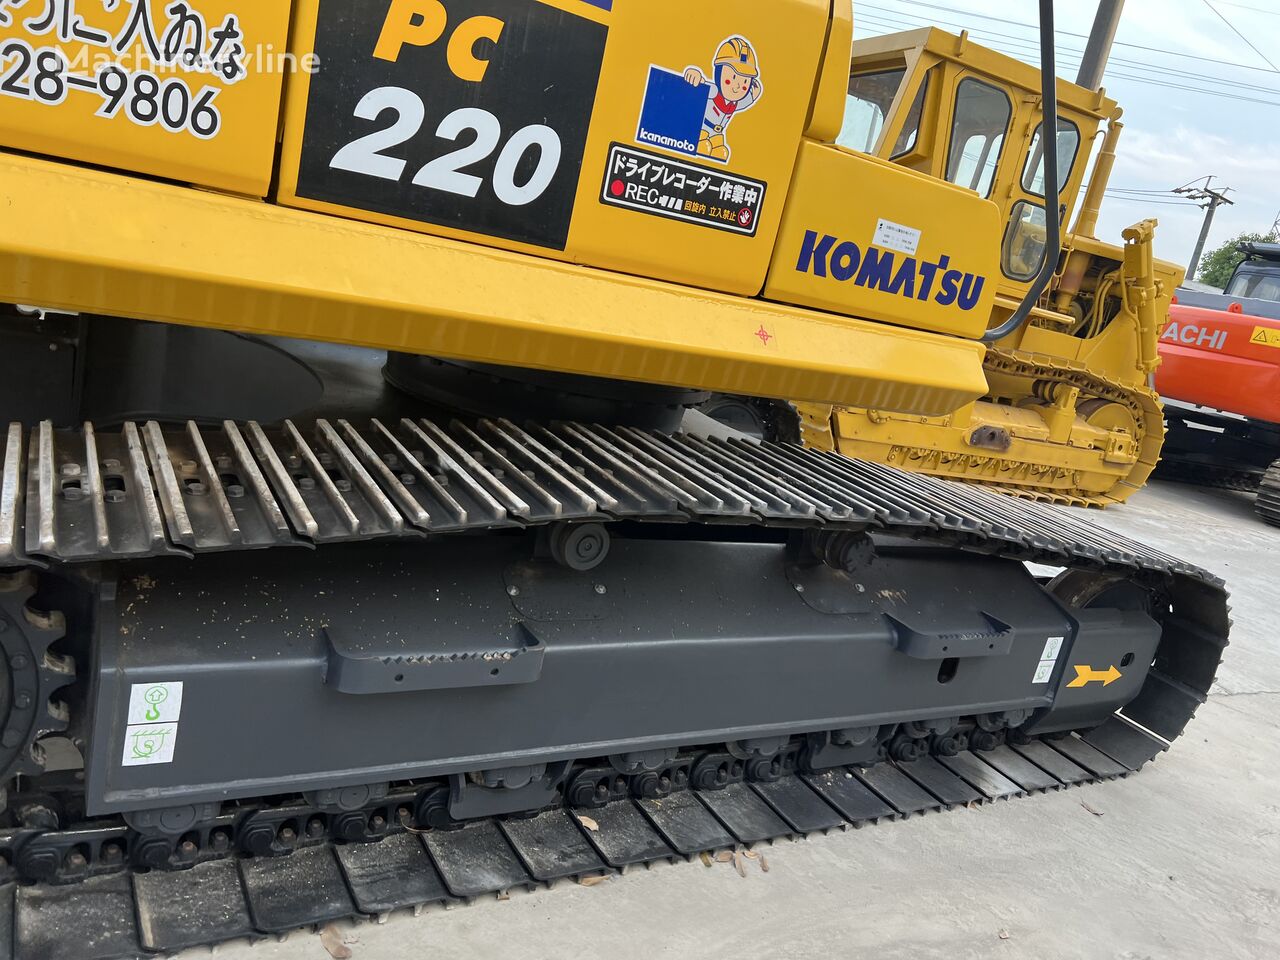 Komatsu PC220-8 tracked excavator